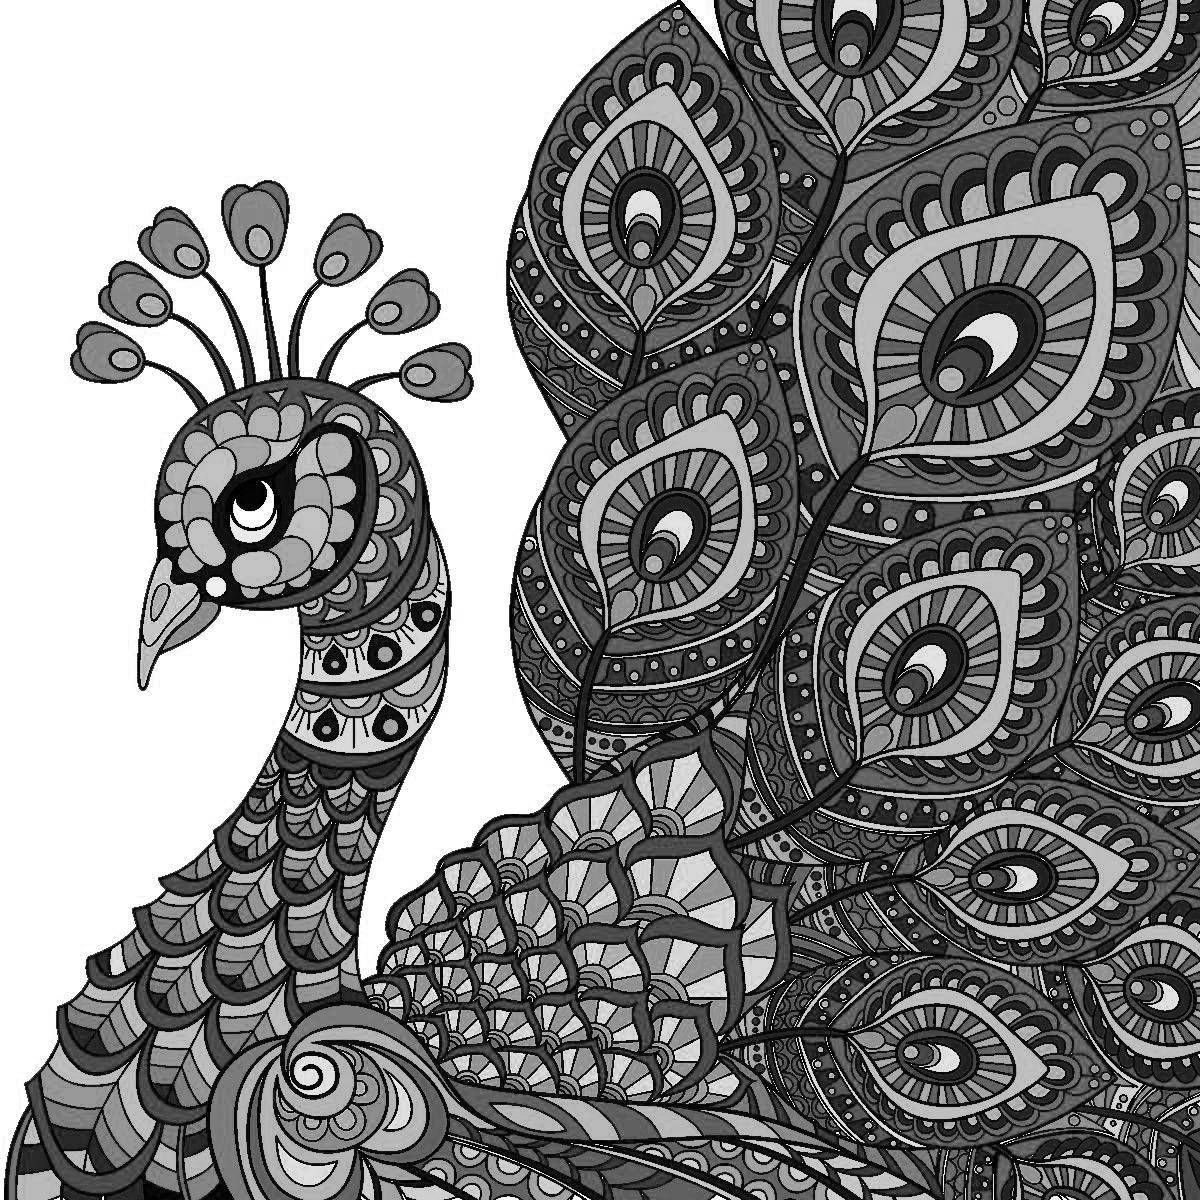 Peacock shiny coloring book